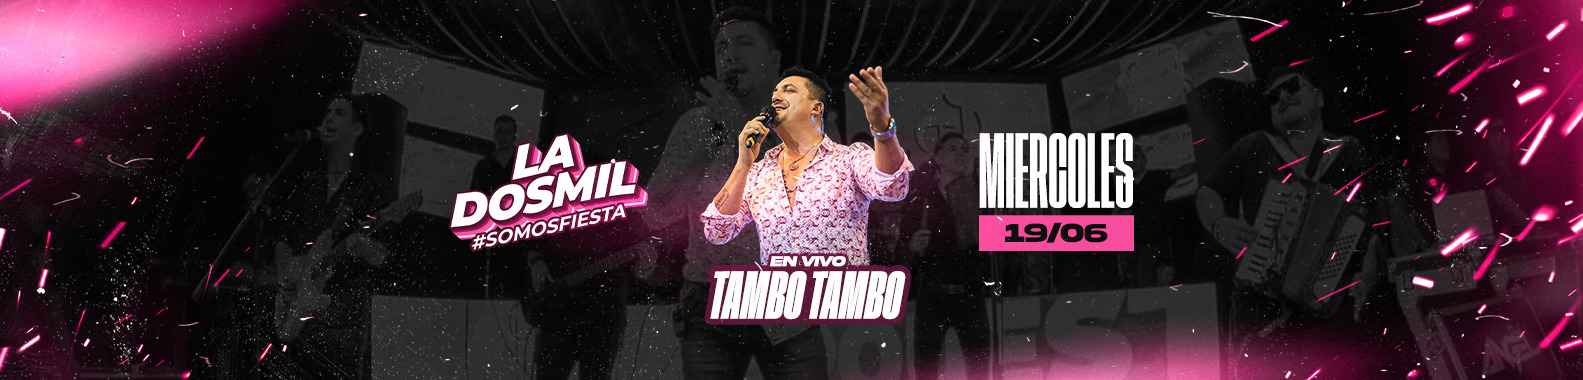 LA DOSMIL #PREFERIADOS | 19 DE JUNIO | TAMBO TAMBO EN VIVO (+18)